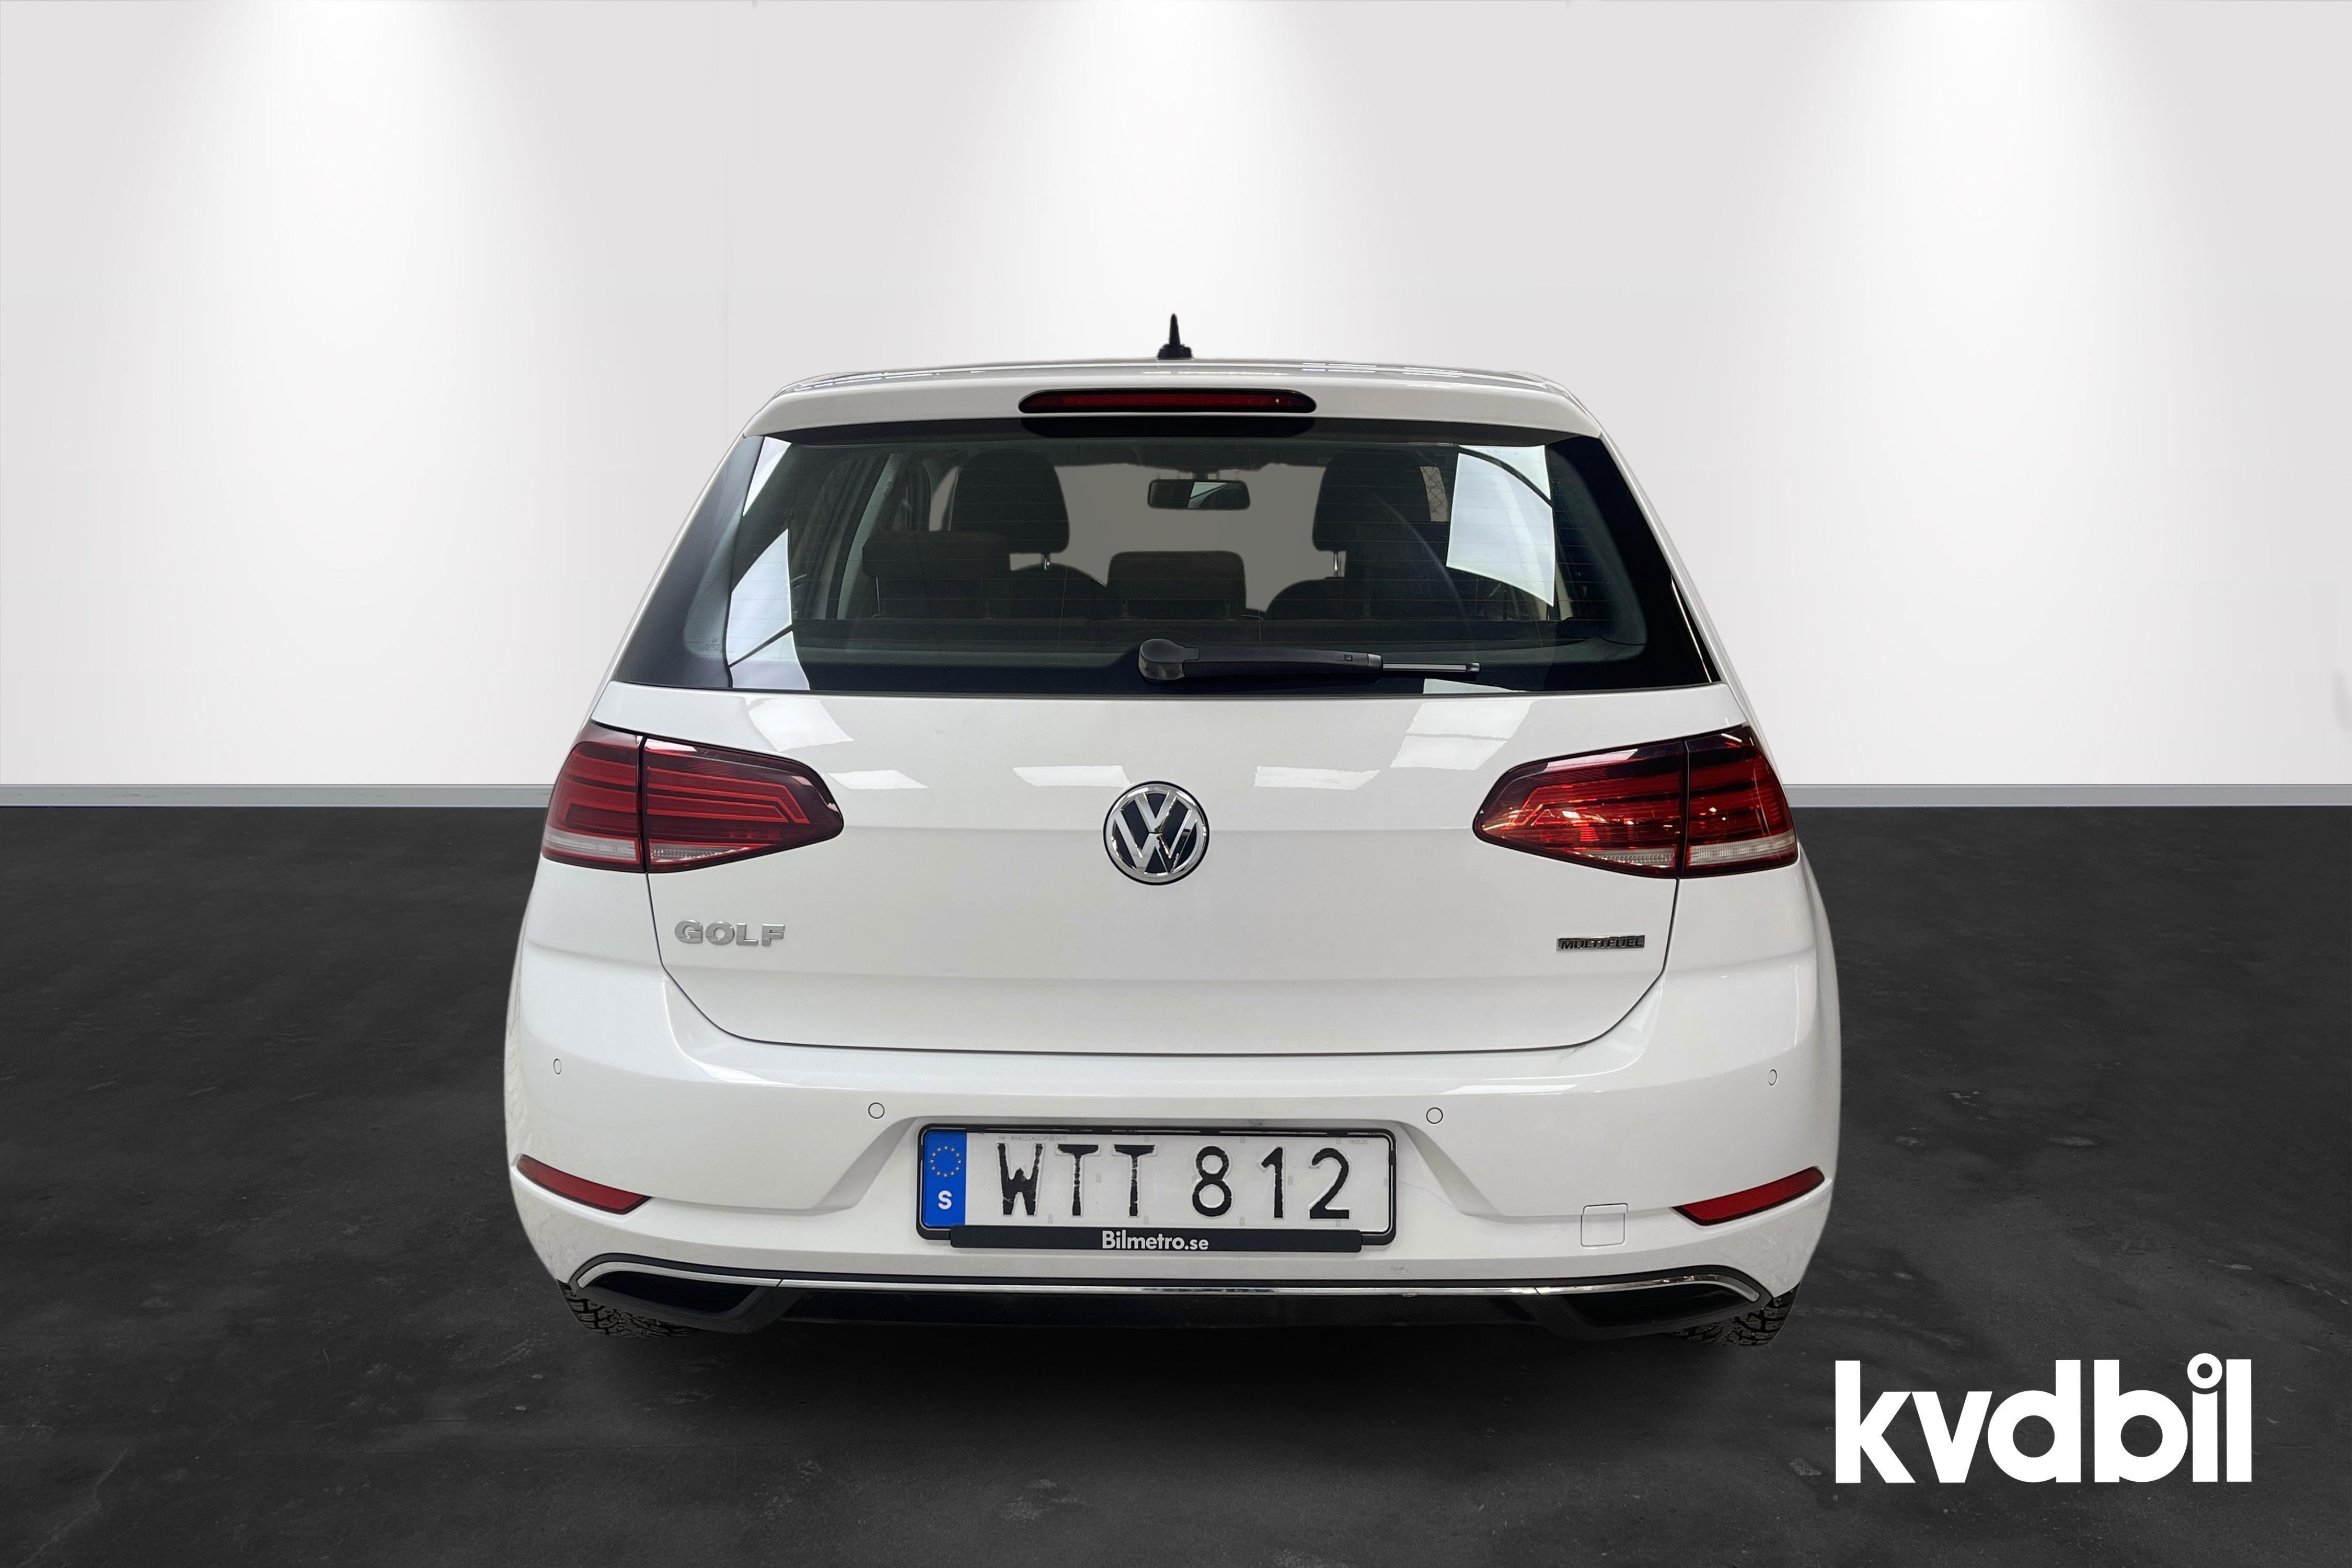 VW Golf VII 1.4 TSI Multifuel 5dr (125hk) - 153 420 km - Manual - white - 2018